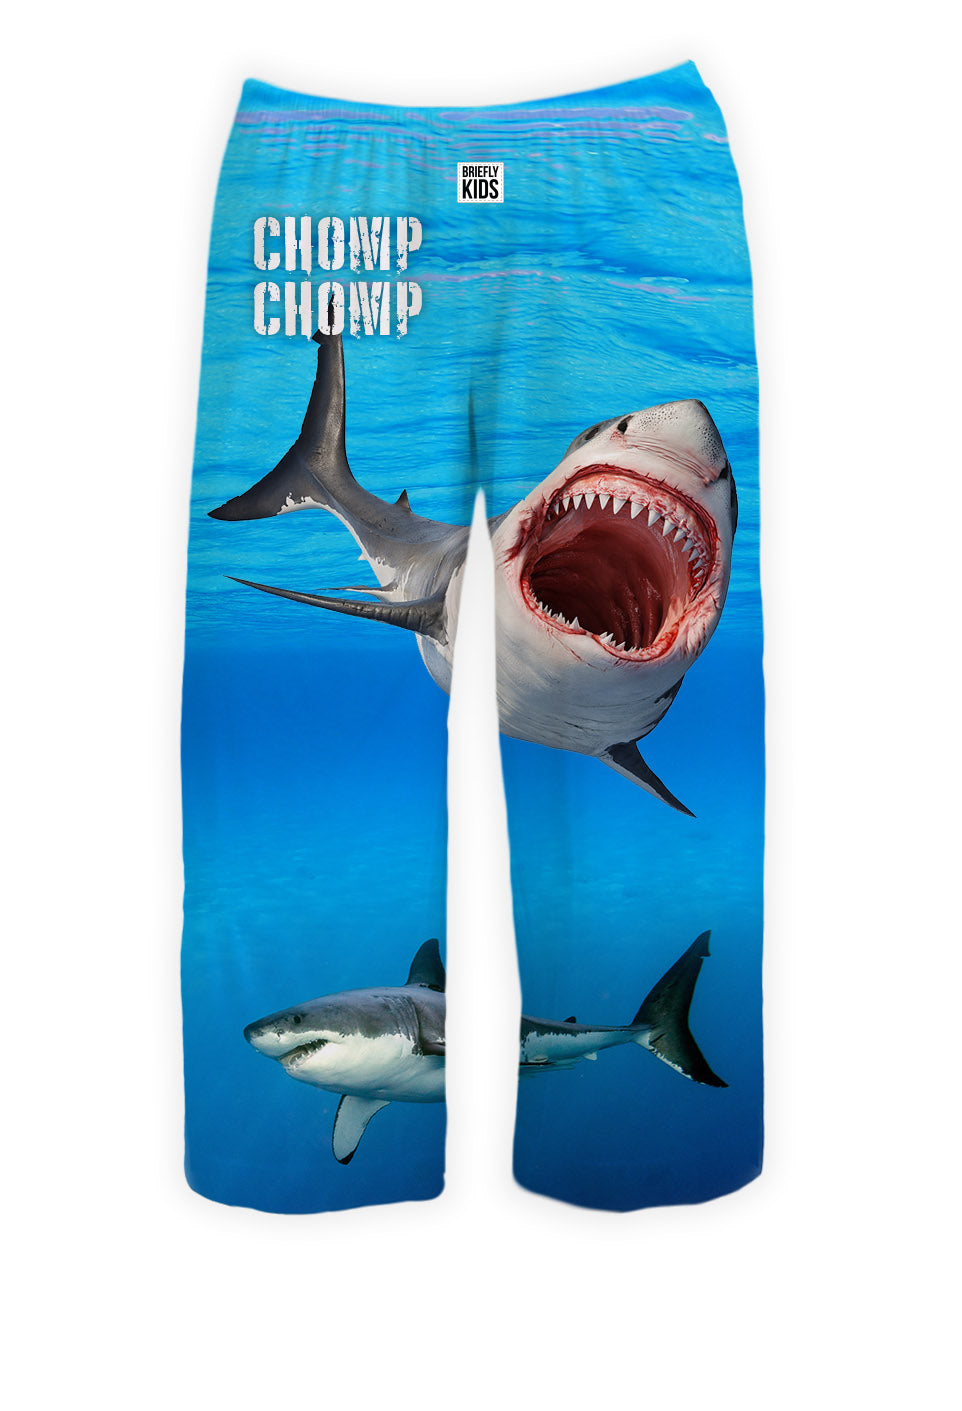 Briefly Kids, Chomp Chomp Shark Lounge Pants